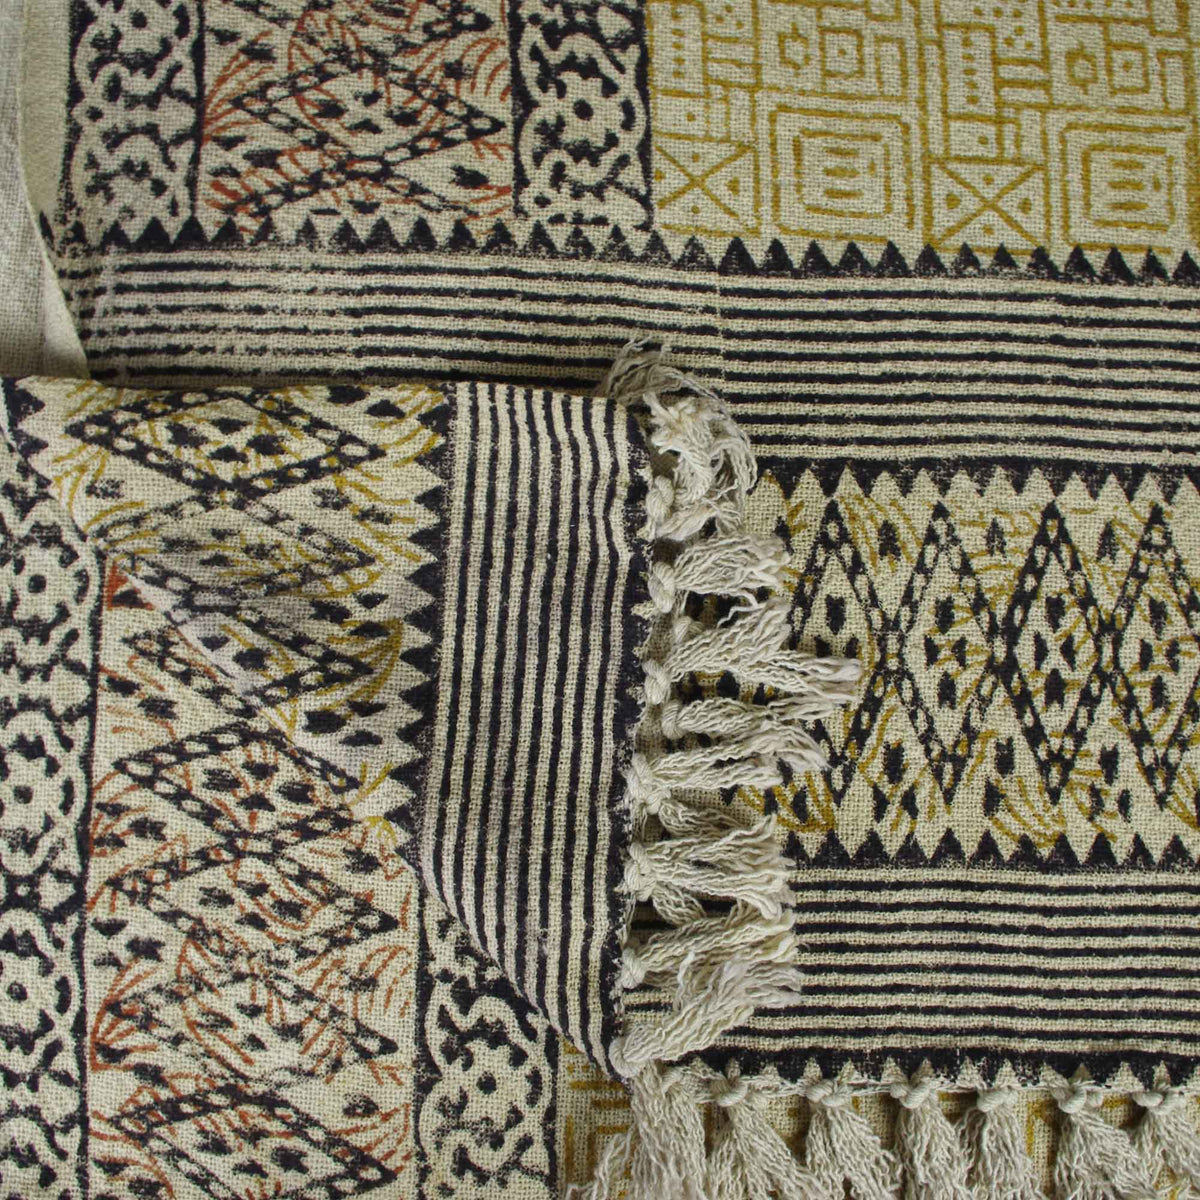 Handloom Mud Cloth Block Printed Cotton Sofa Throw With Tassels - Abstract